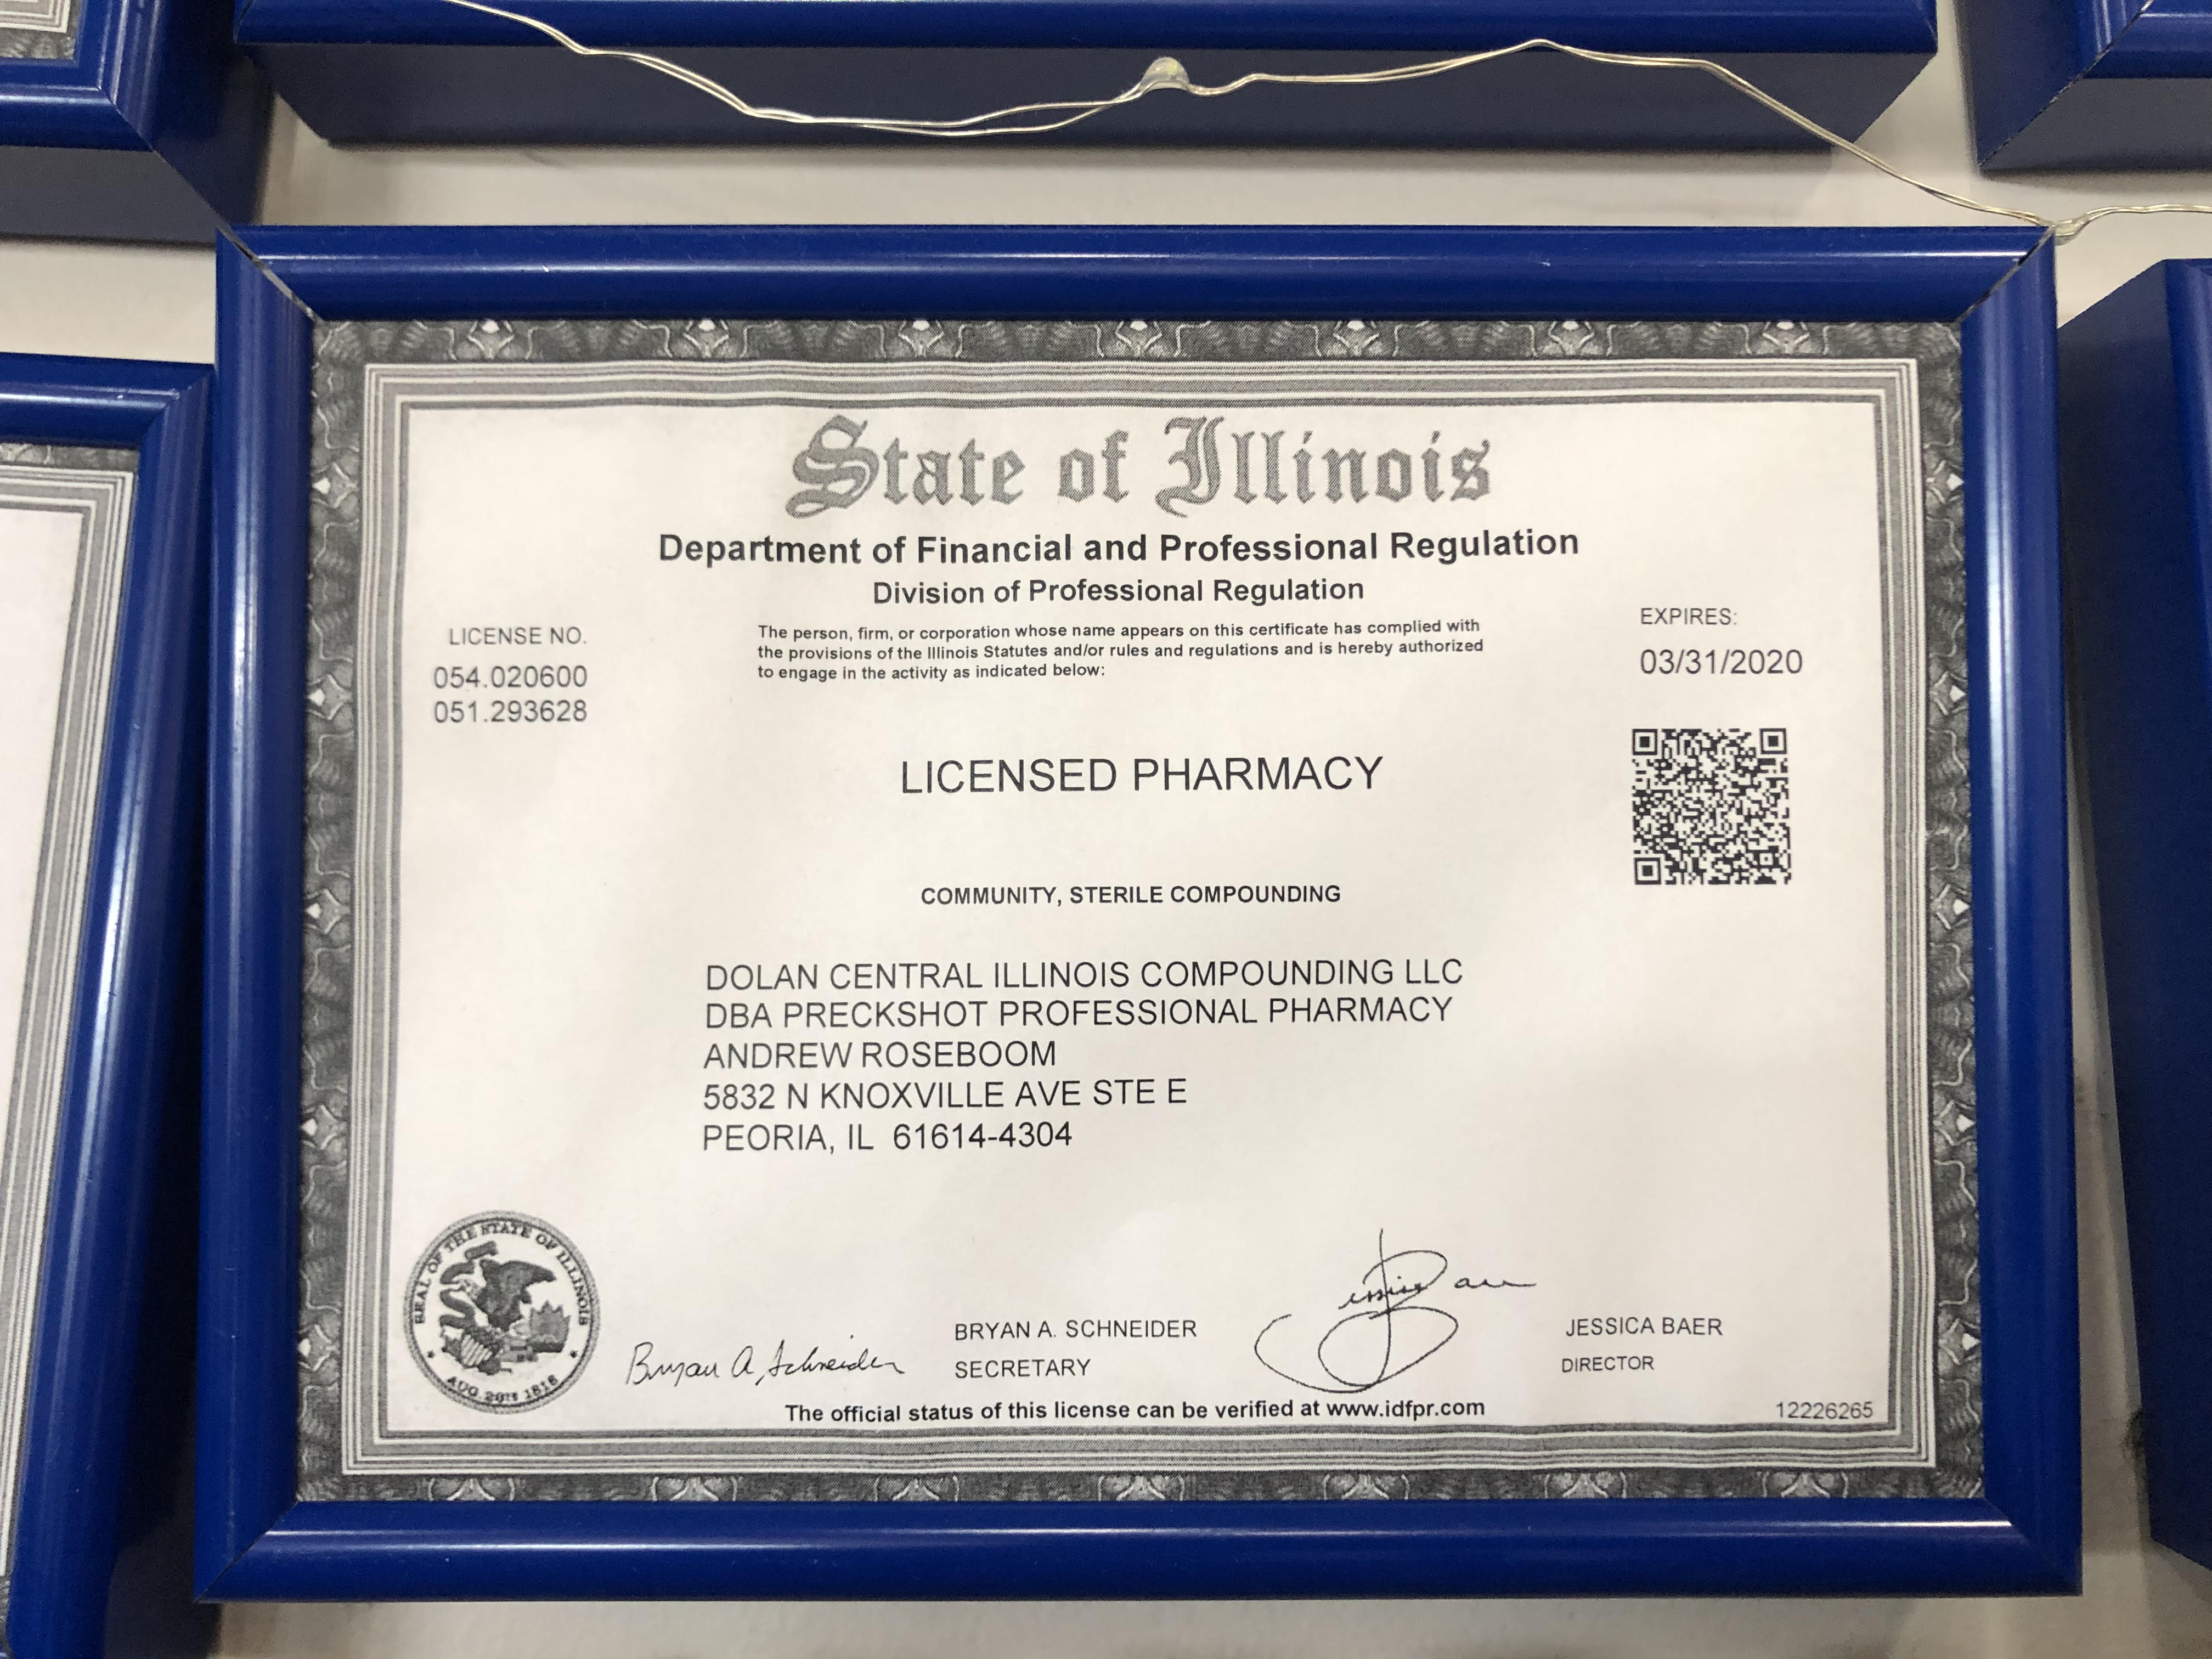 Preckshot Compounding Pharmacy pharmacy license